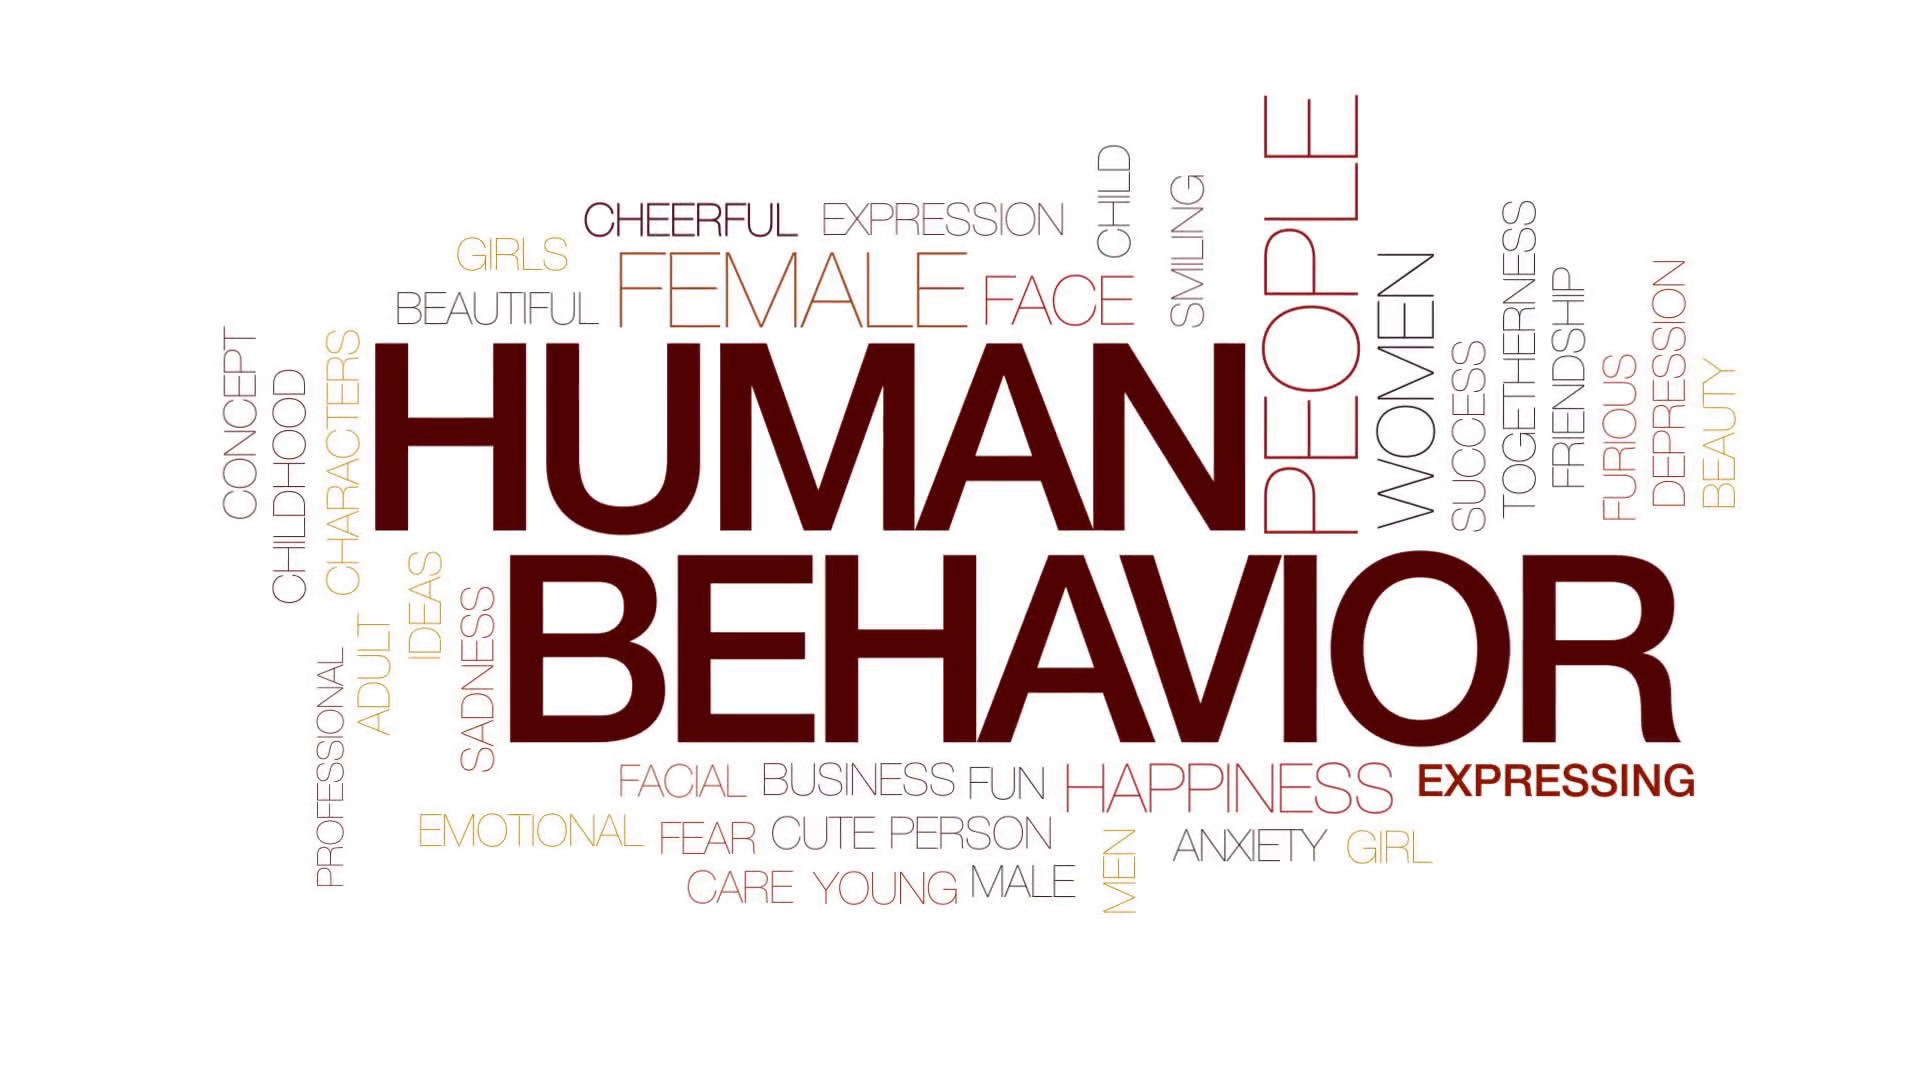 Predictive Analytics For Human Behavior - The Future Of Decision-Making